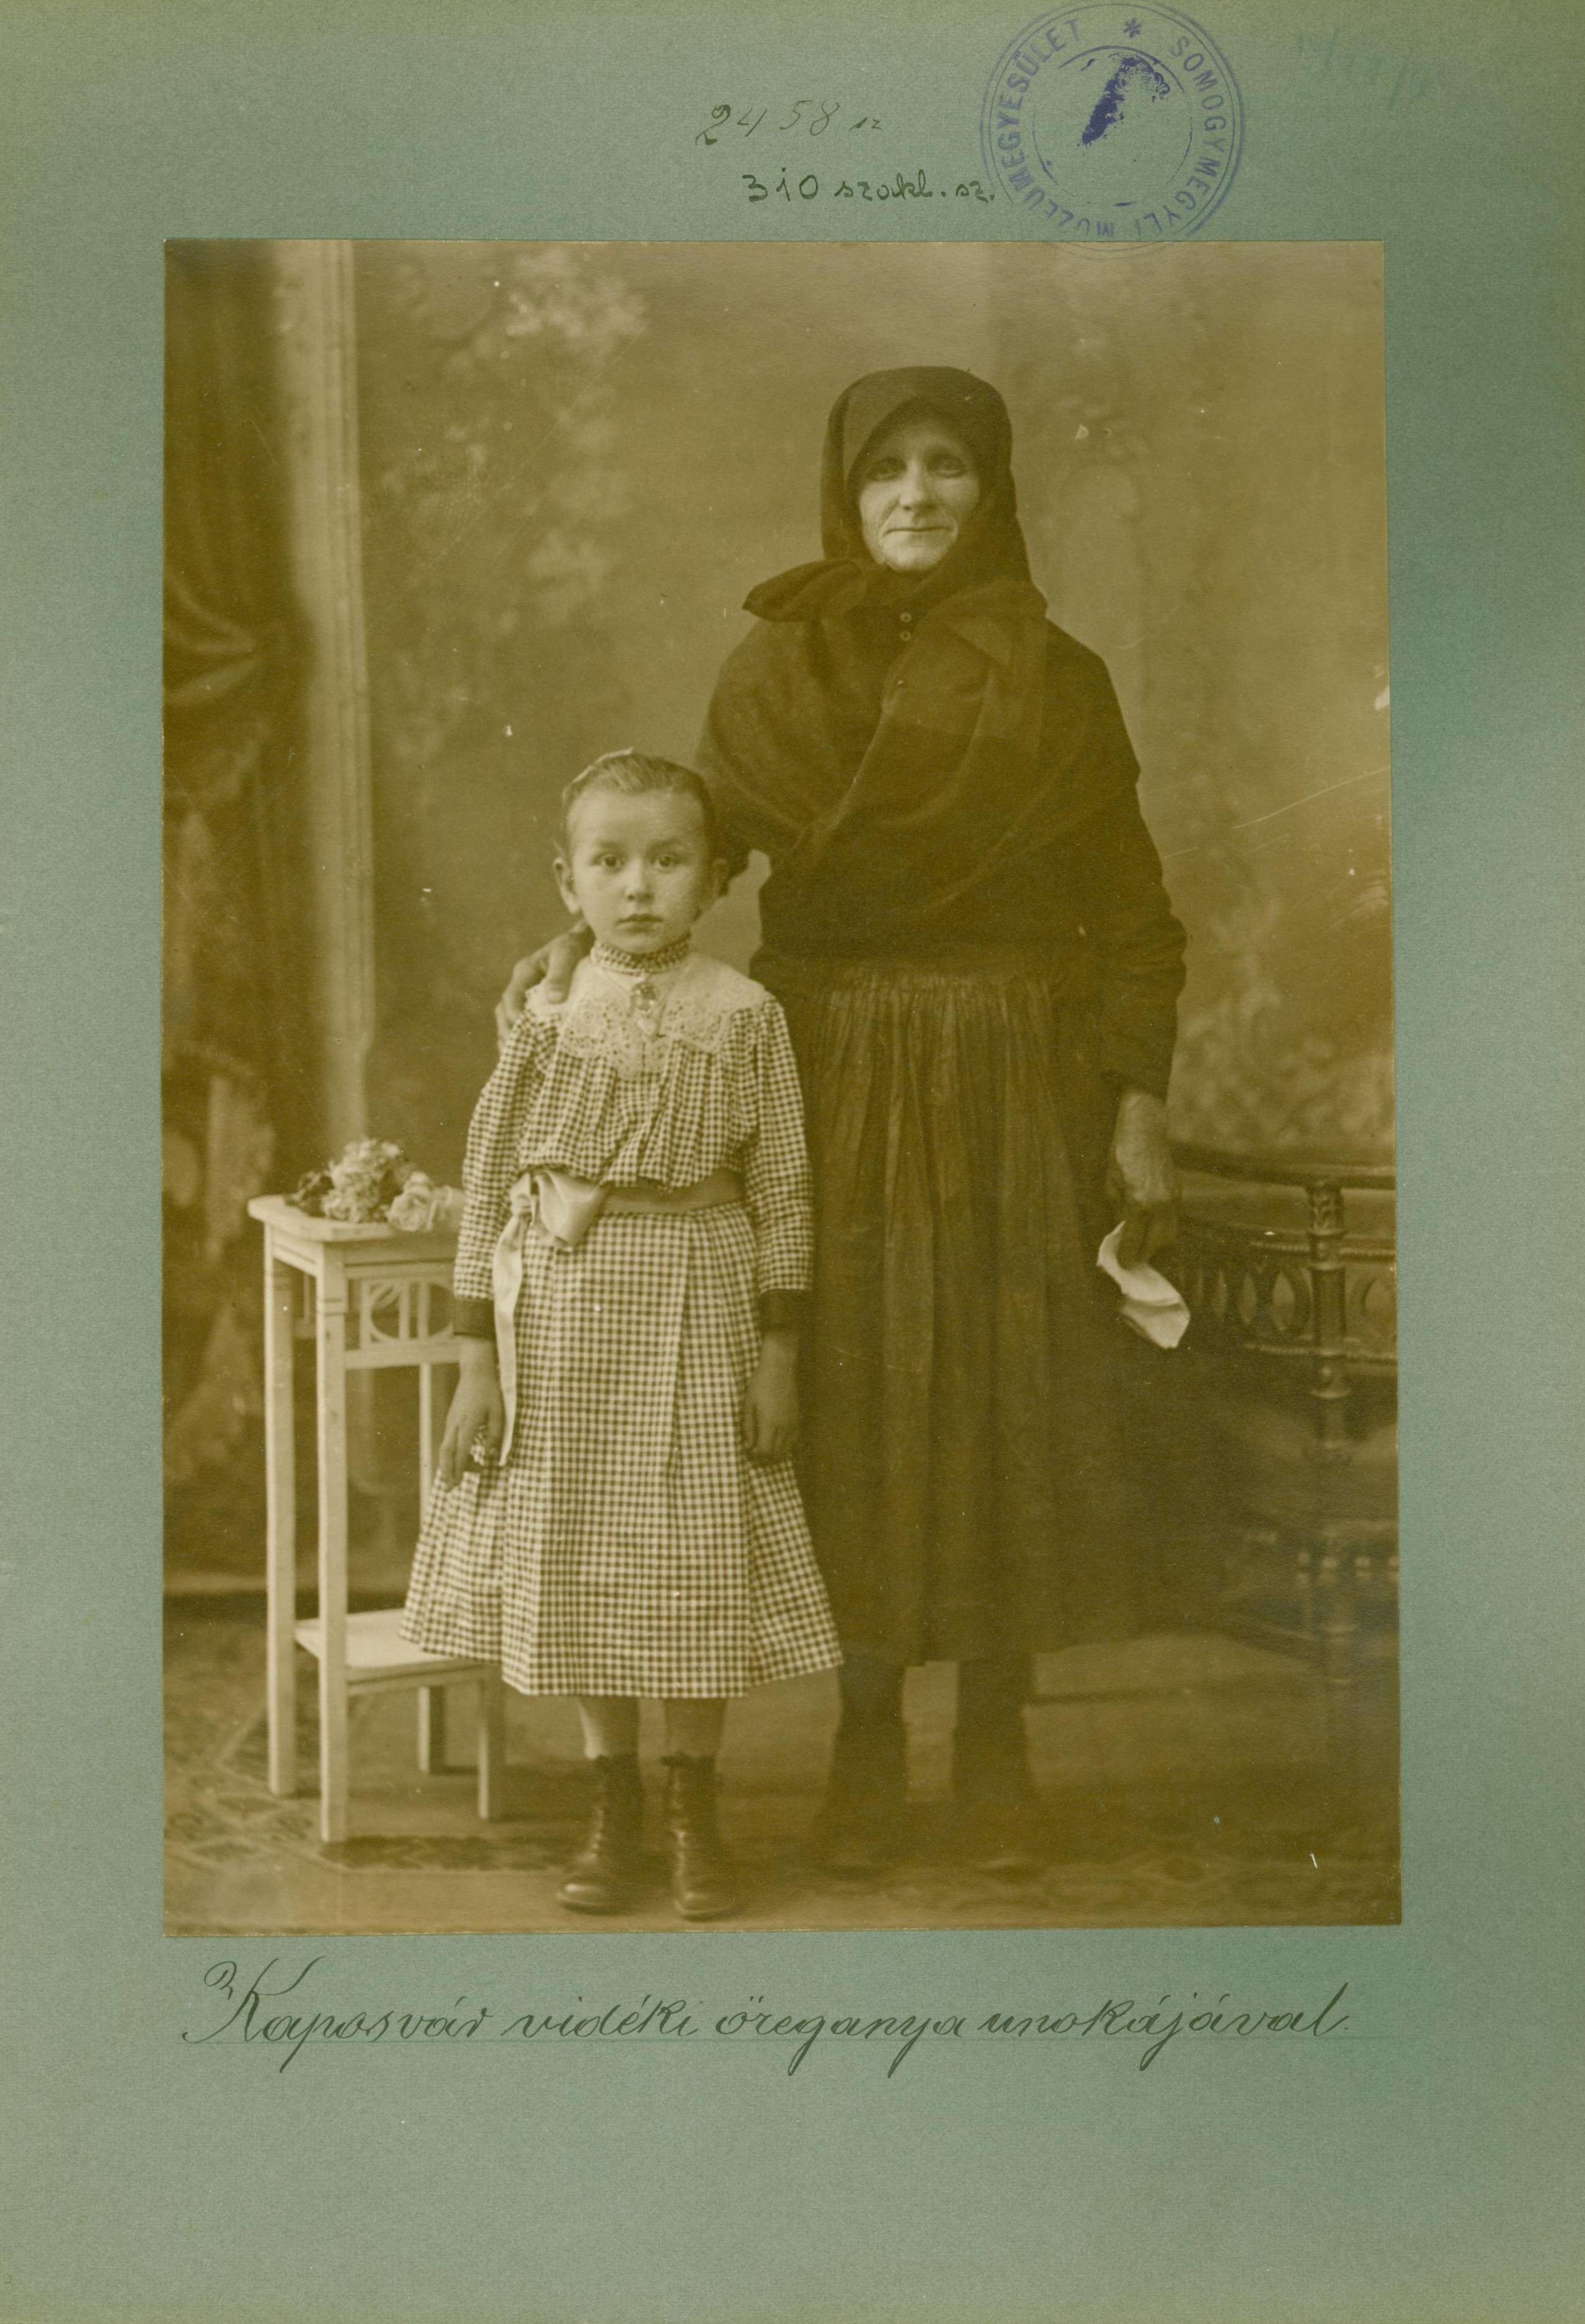 Kaposvár vidéki öreganya unokájával (Rippl-Rónai Múzeum RR-F)